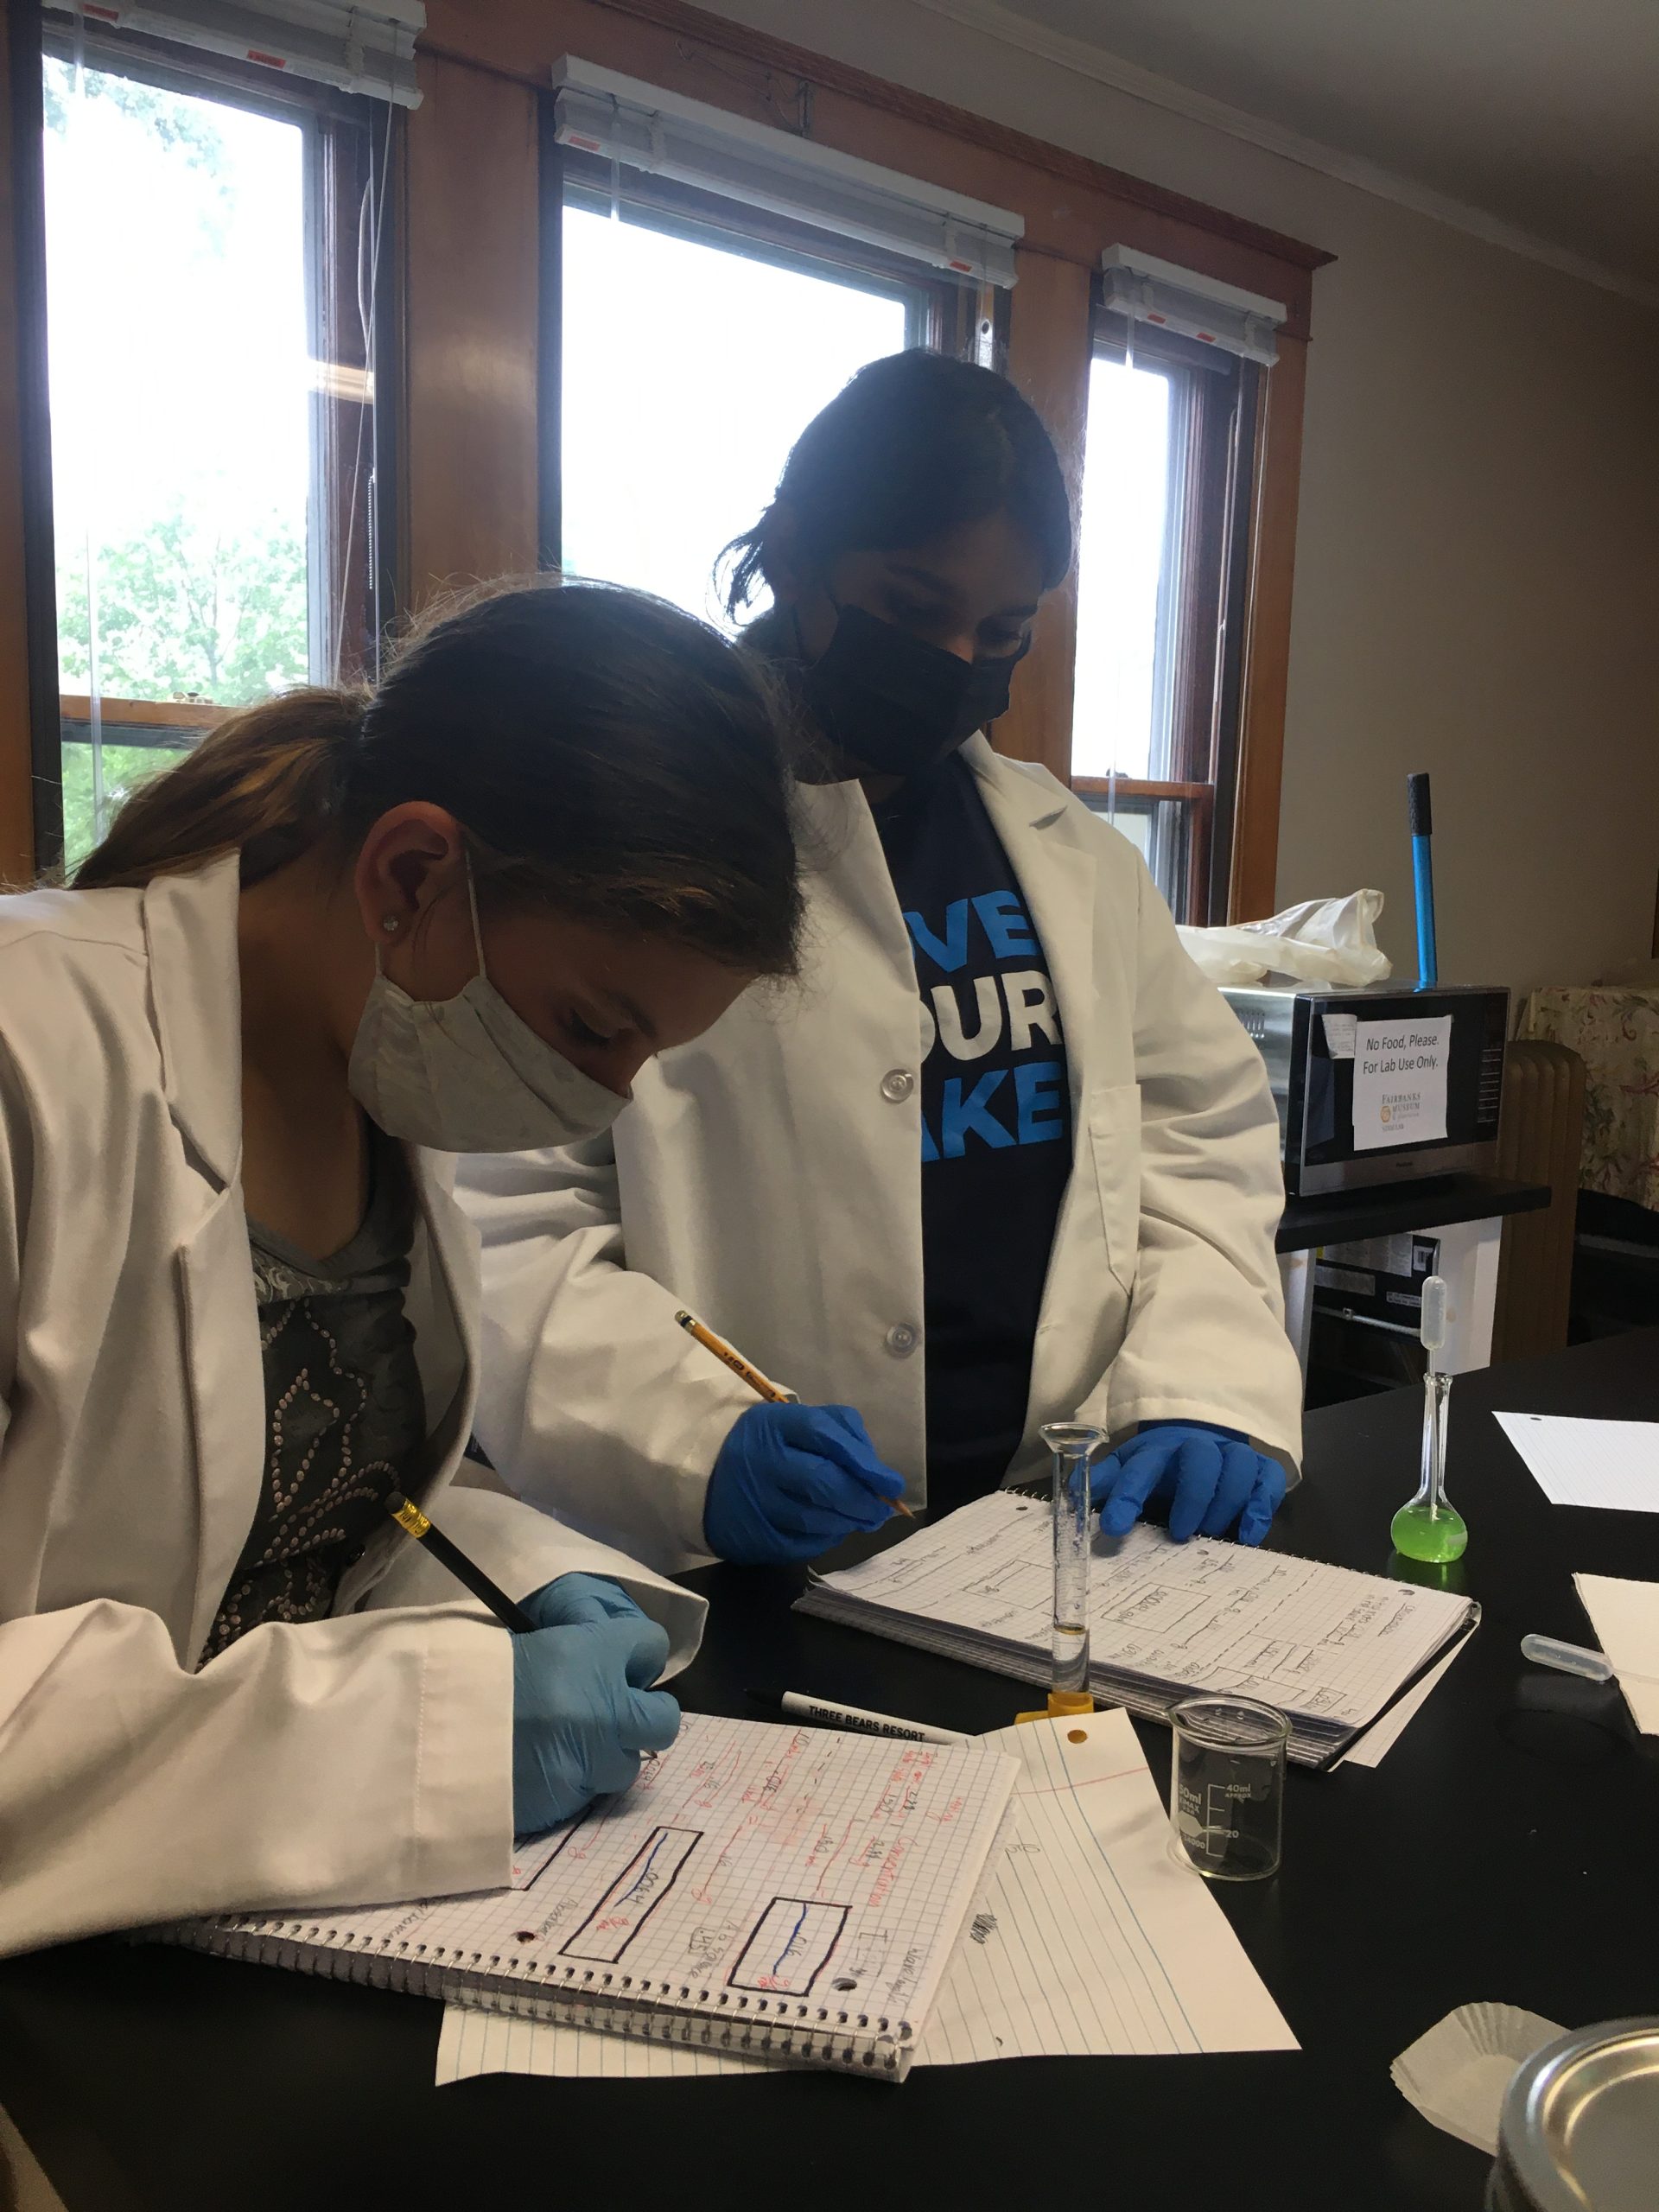 Students recording data in STEM lab